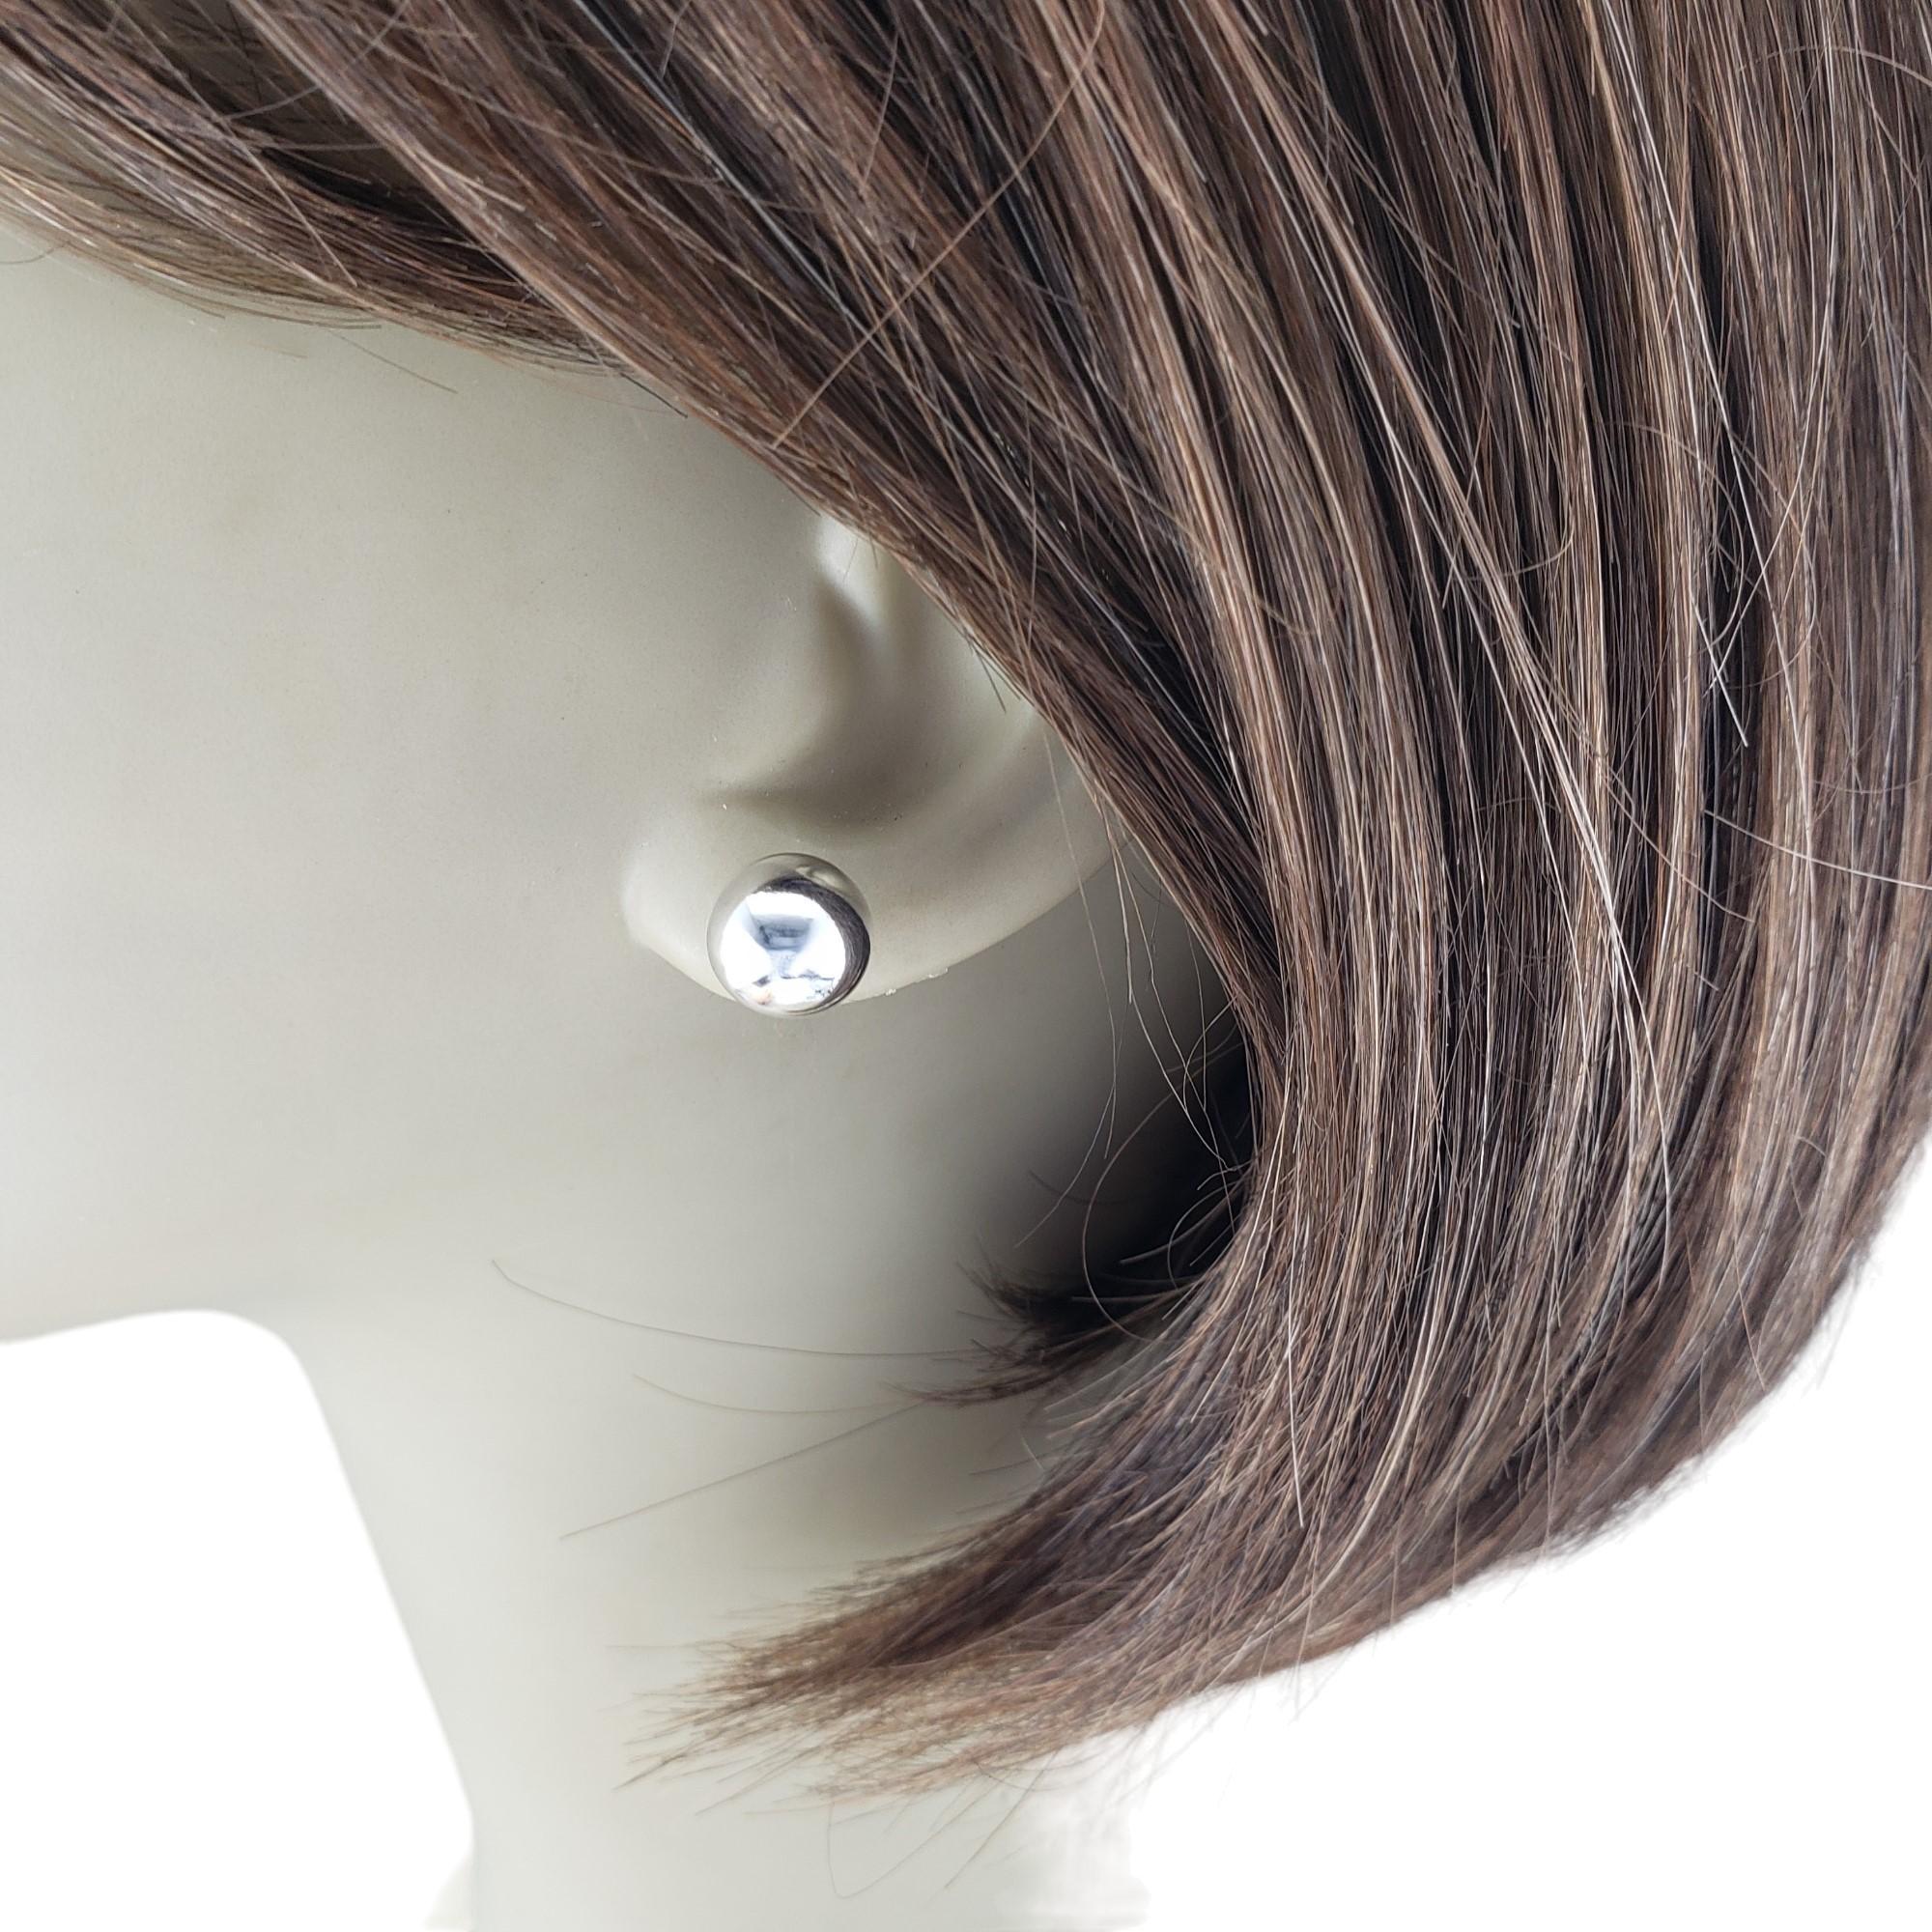 Tiffany & Co. Sterling Silver Ball 10mm Earrings #17163 For Sale 4